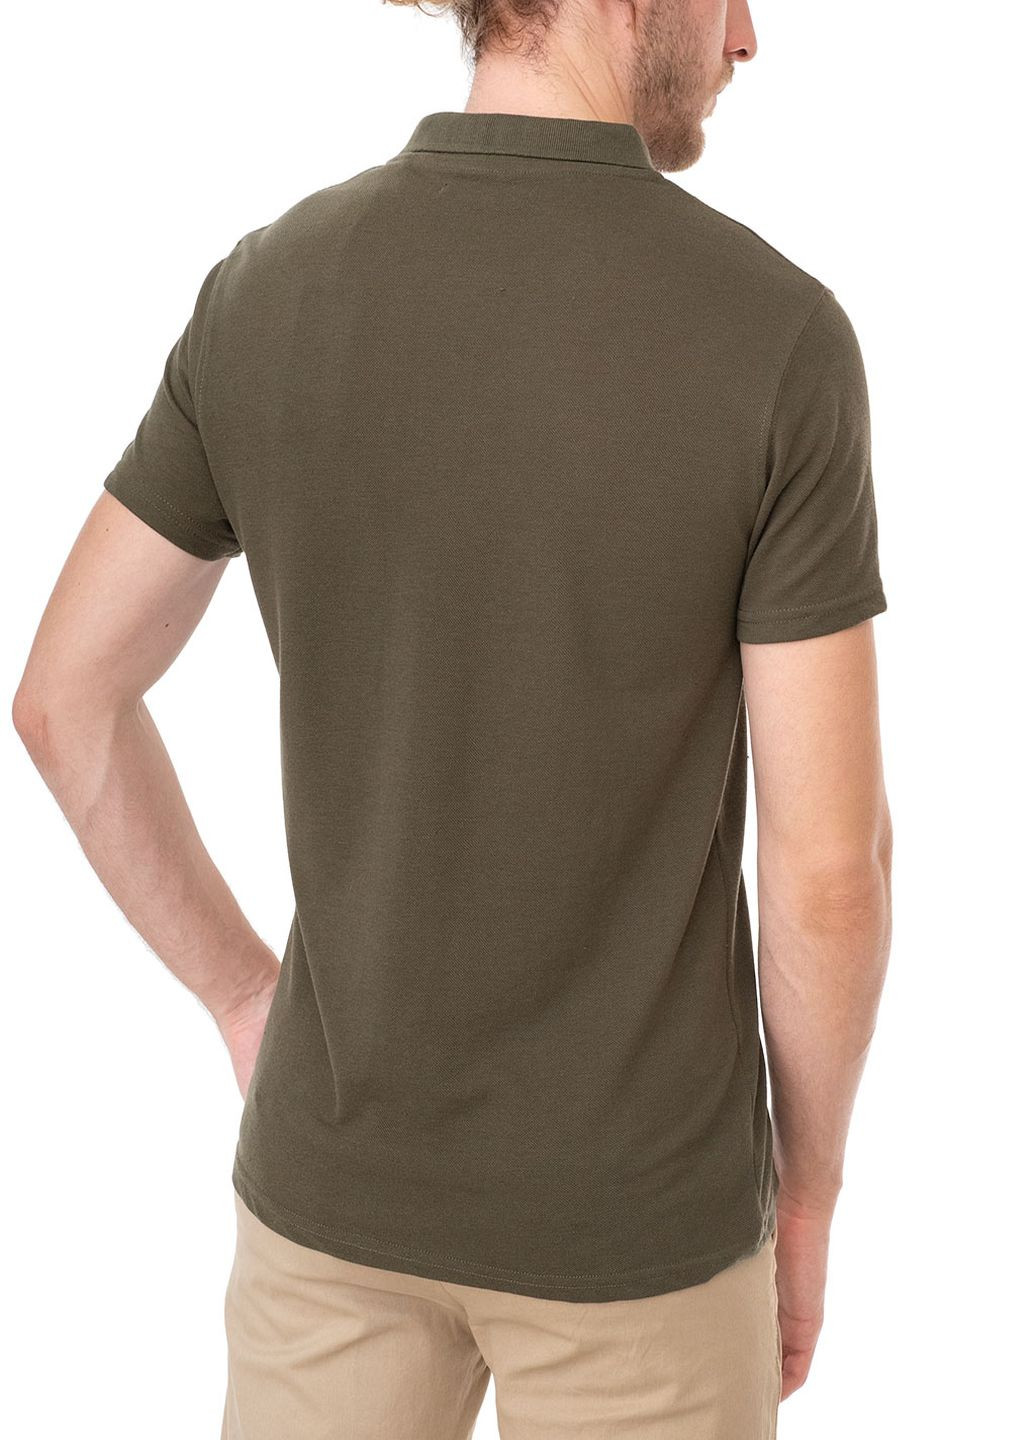 Оливковая (хаки) футболка-поло для мужчин E-Bound